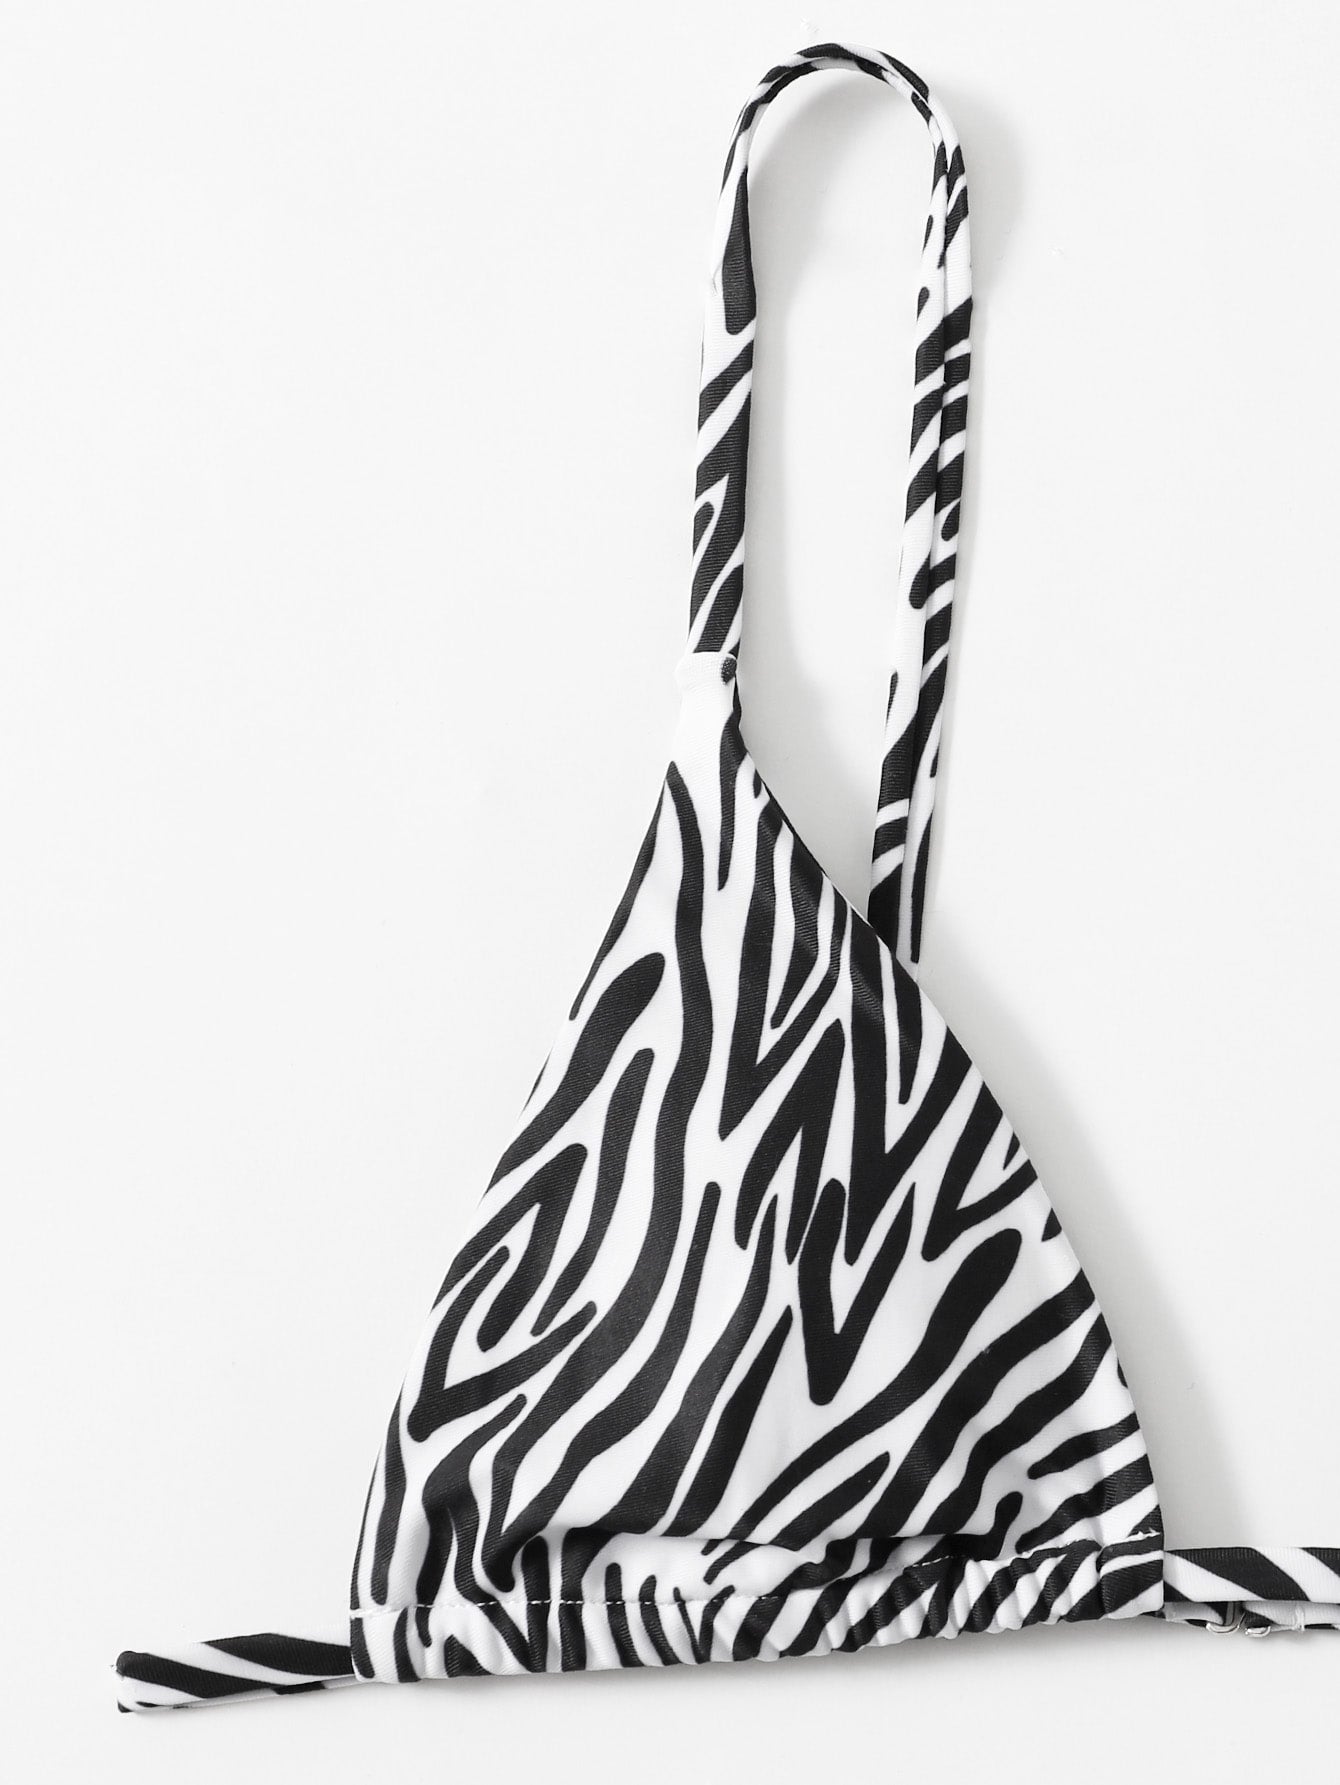 B&W Zebra Print Bikini - The Beach Bae